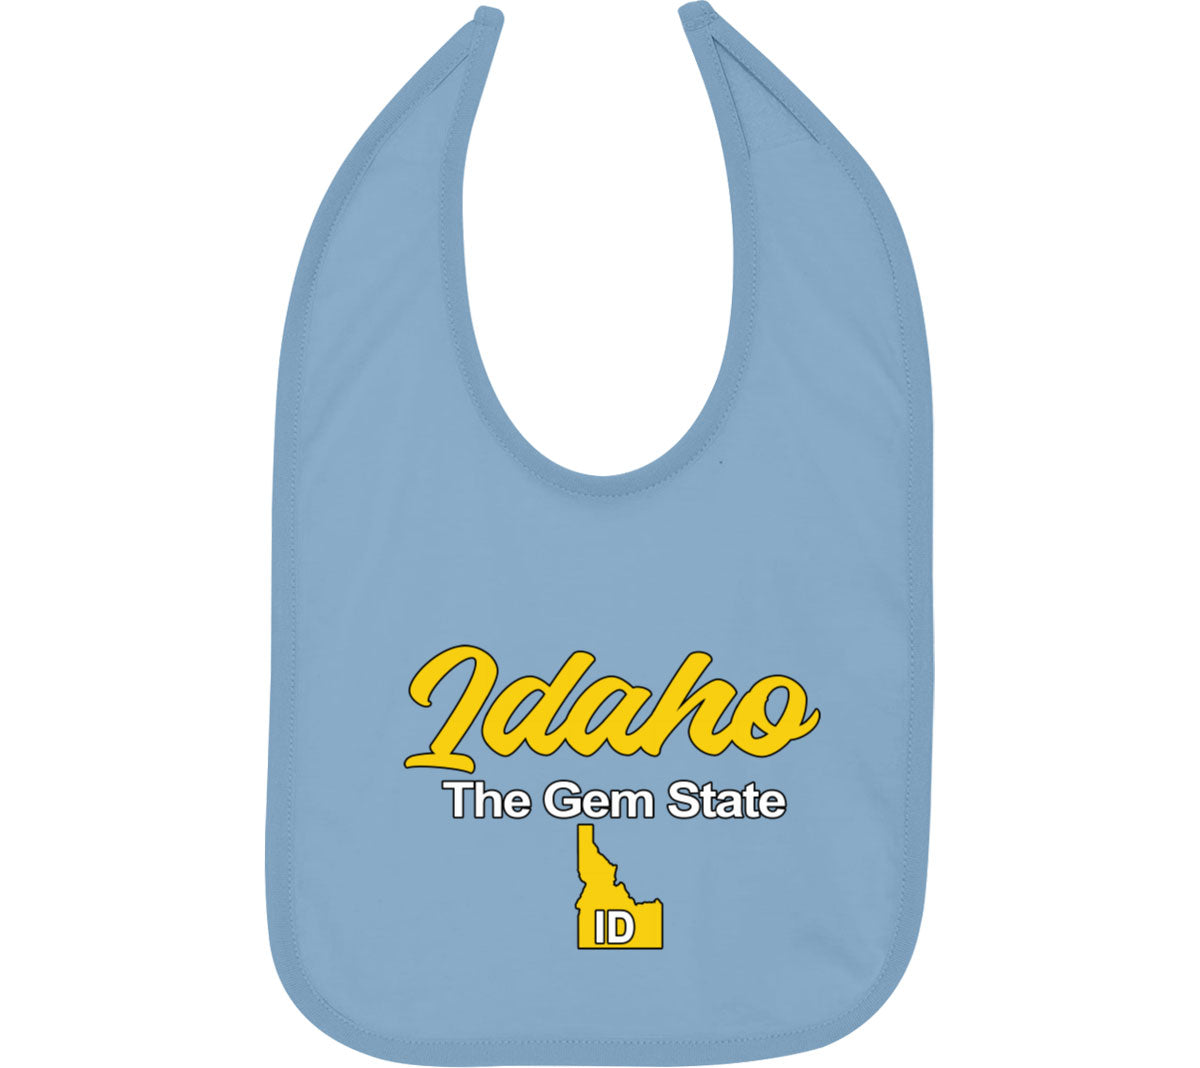 Idaho The Gem State Baby Bib